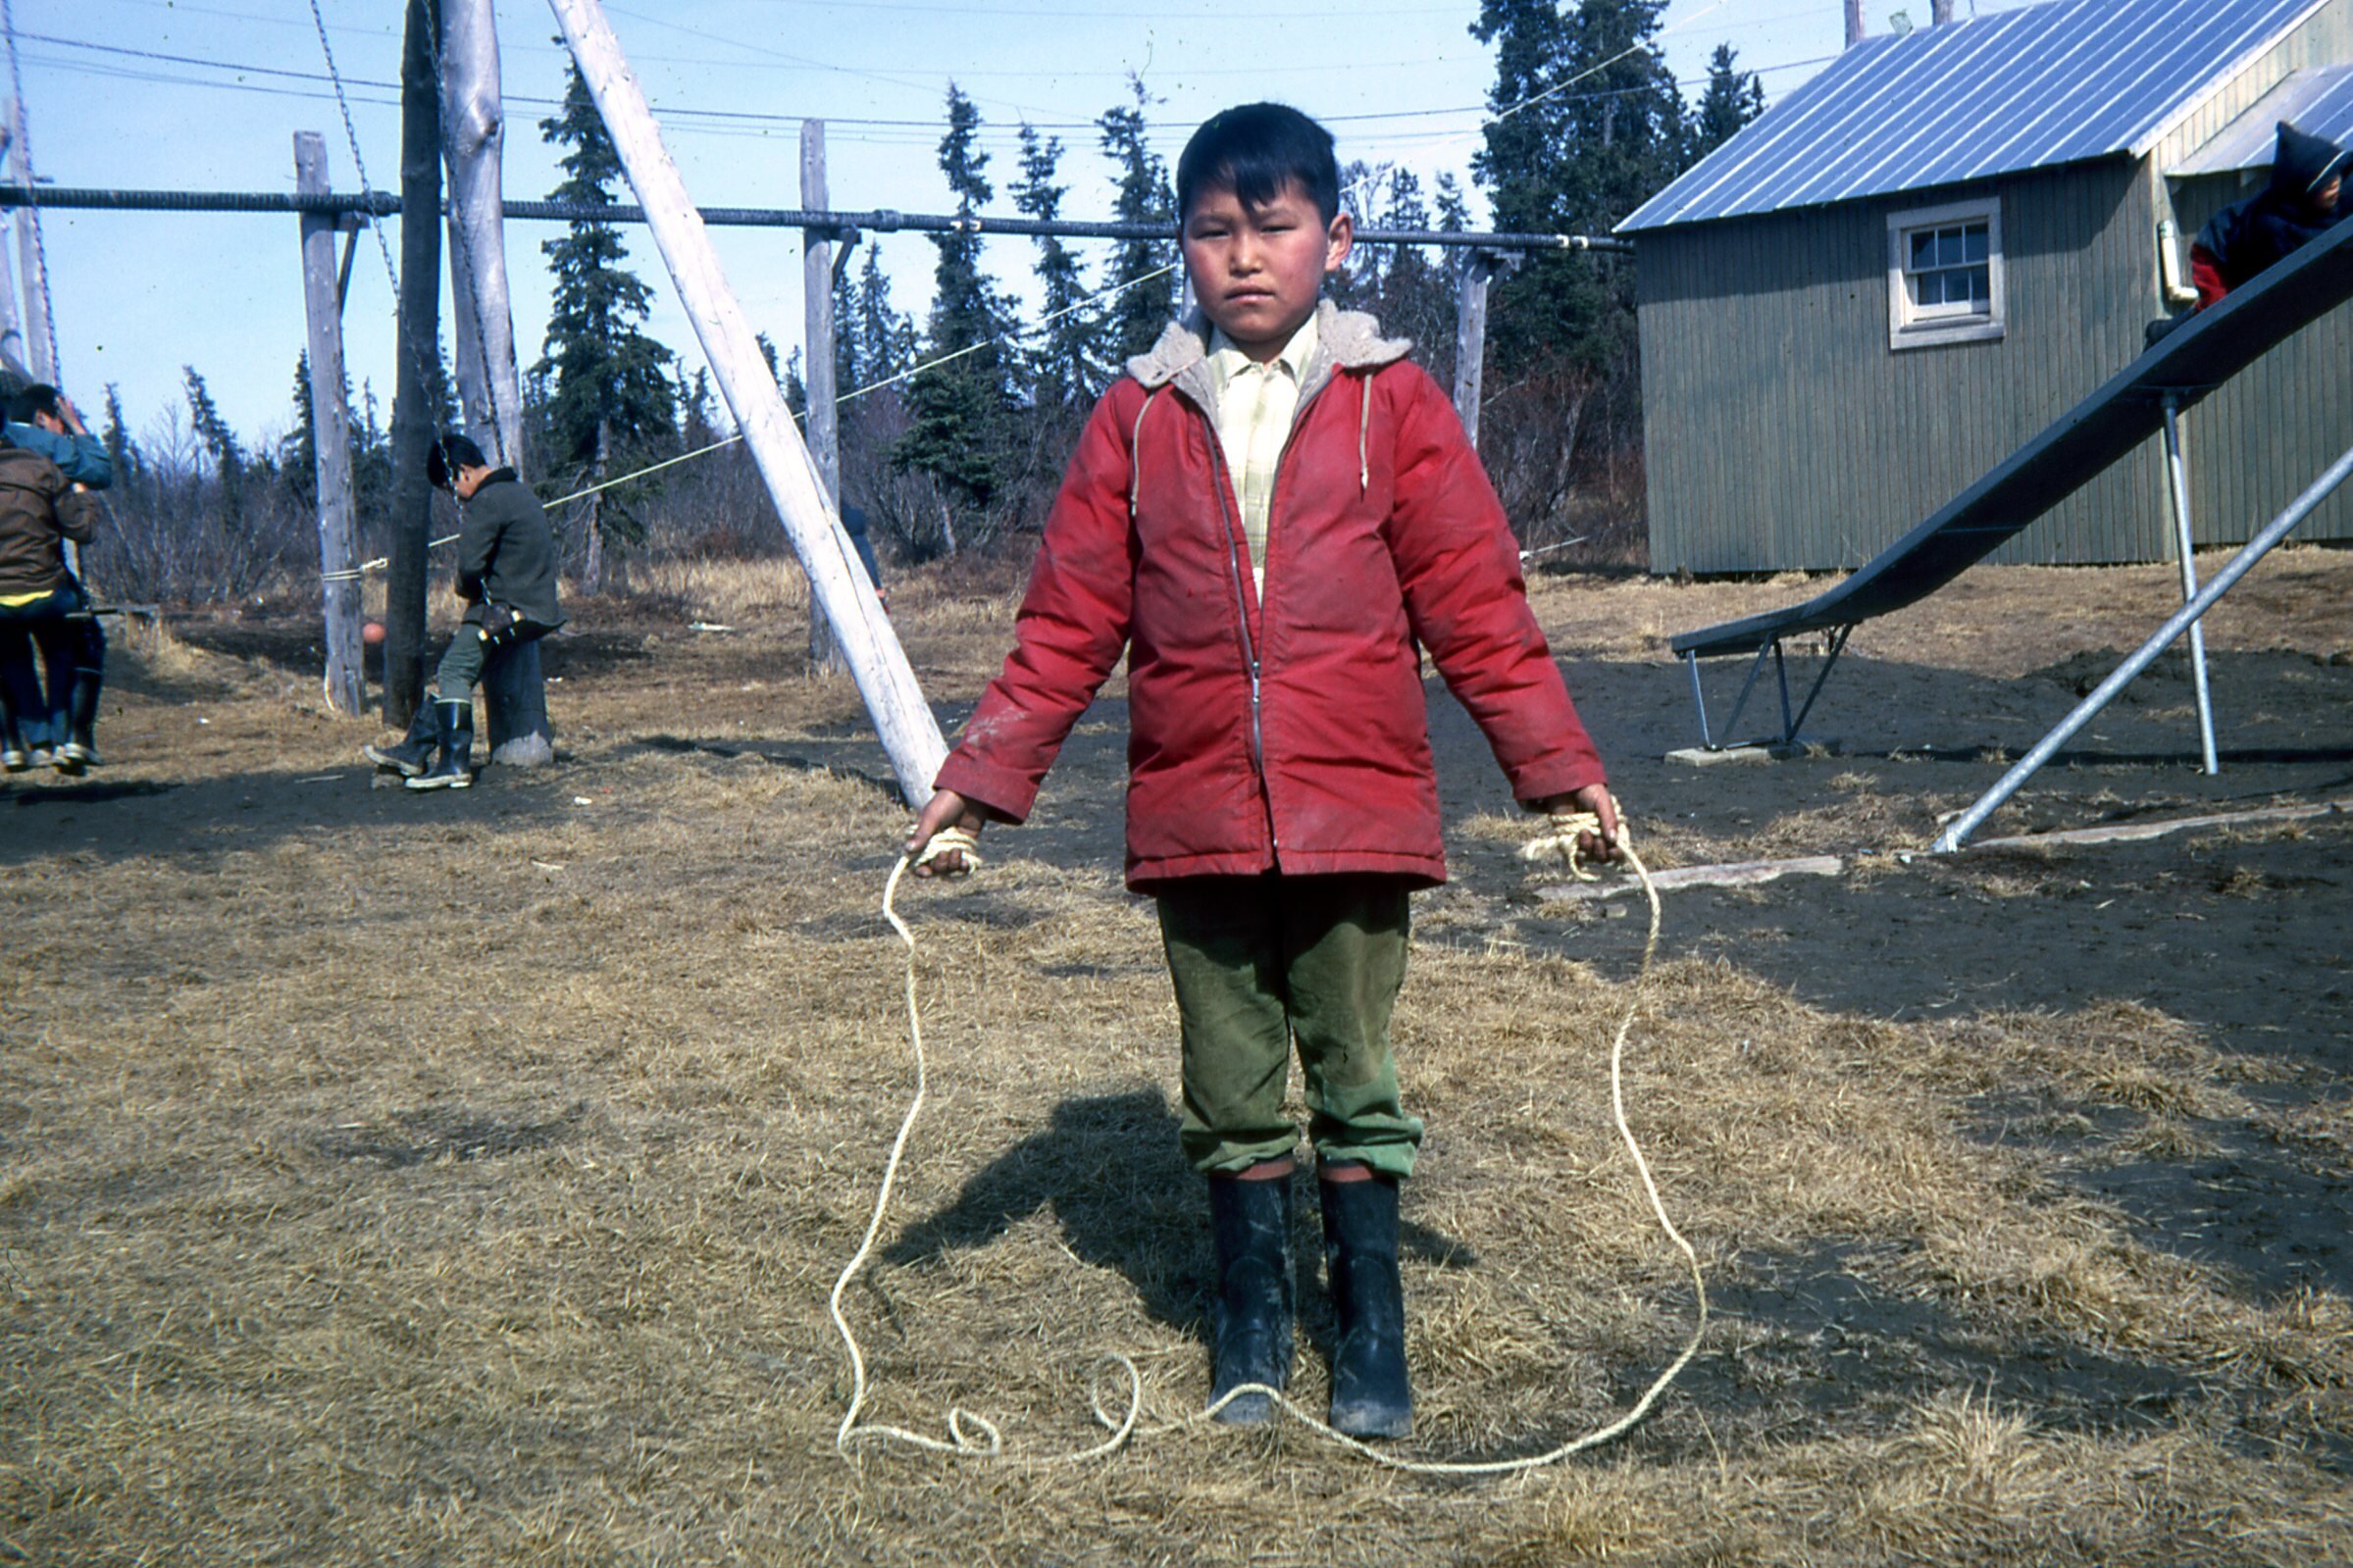 1971 Boy jumping rope.jpg